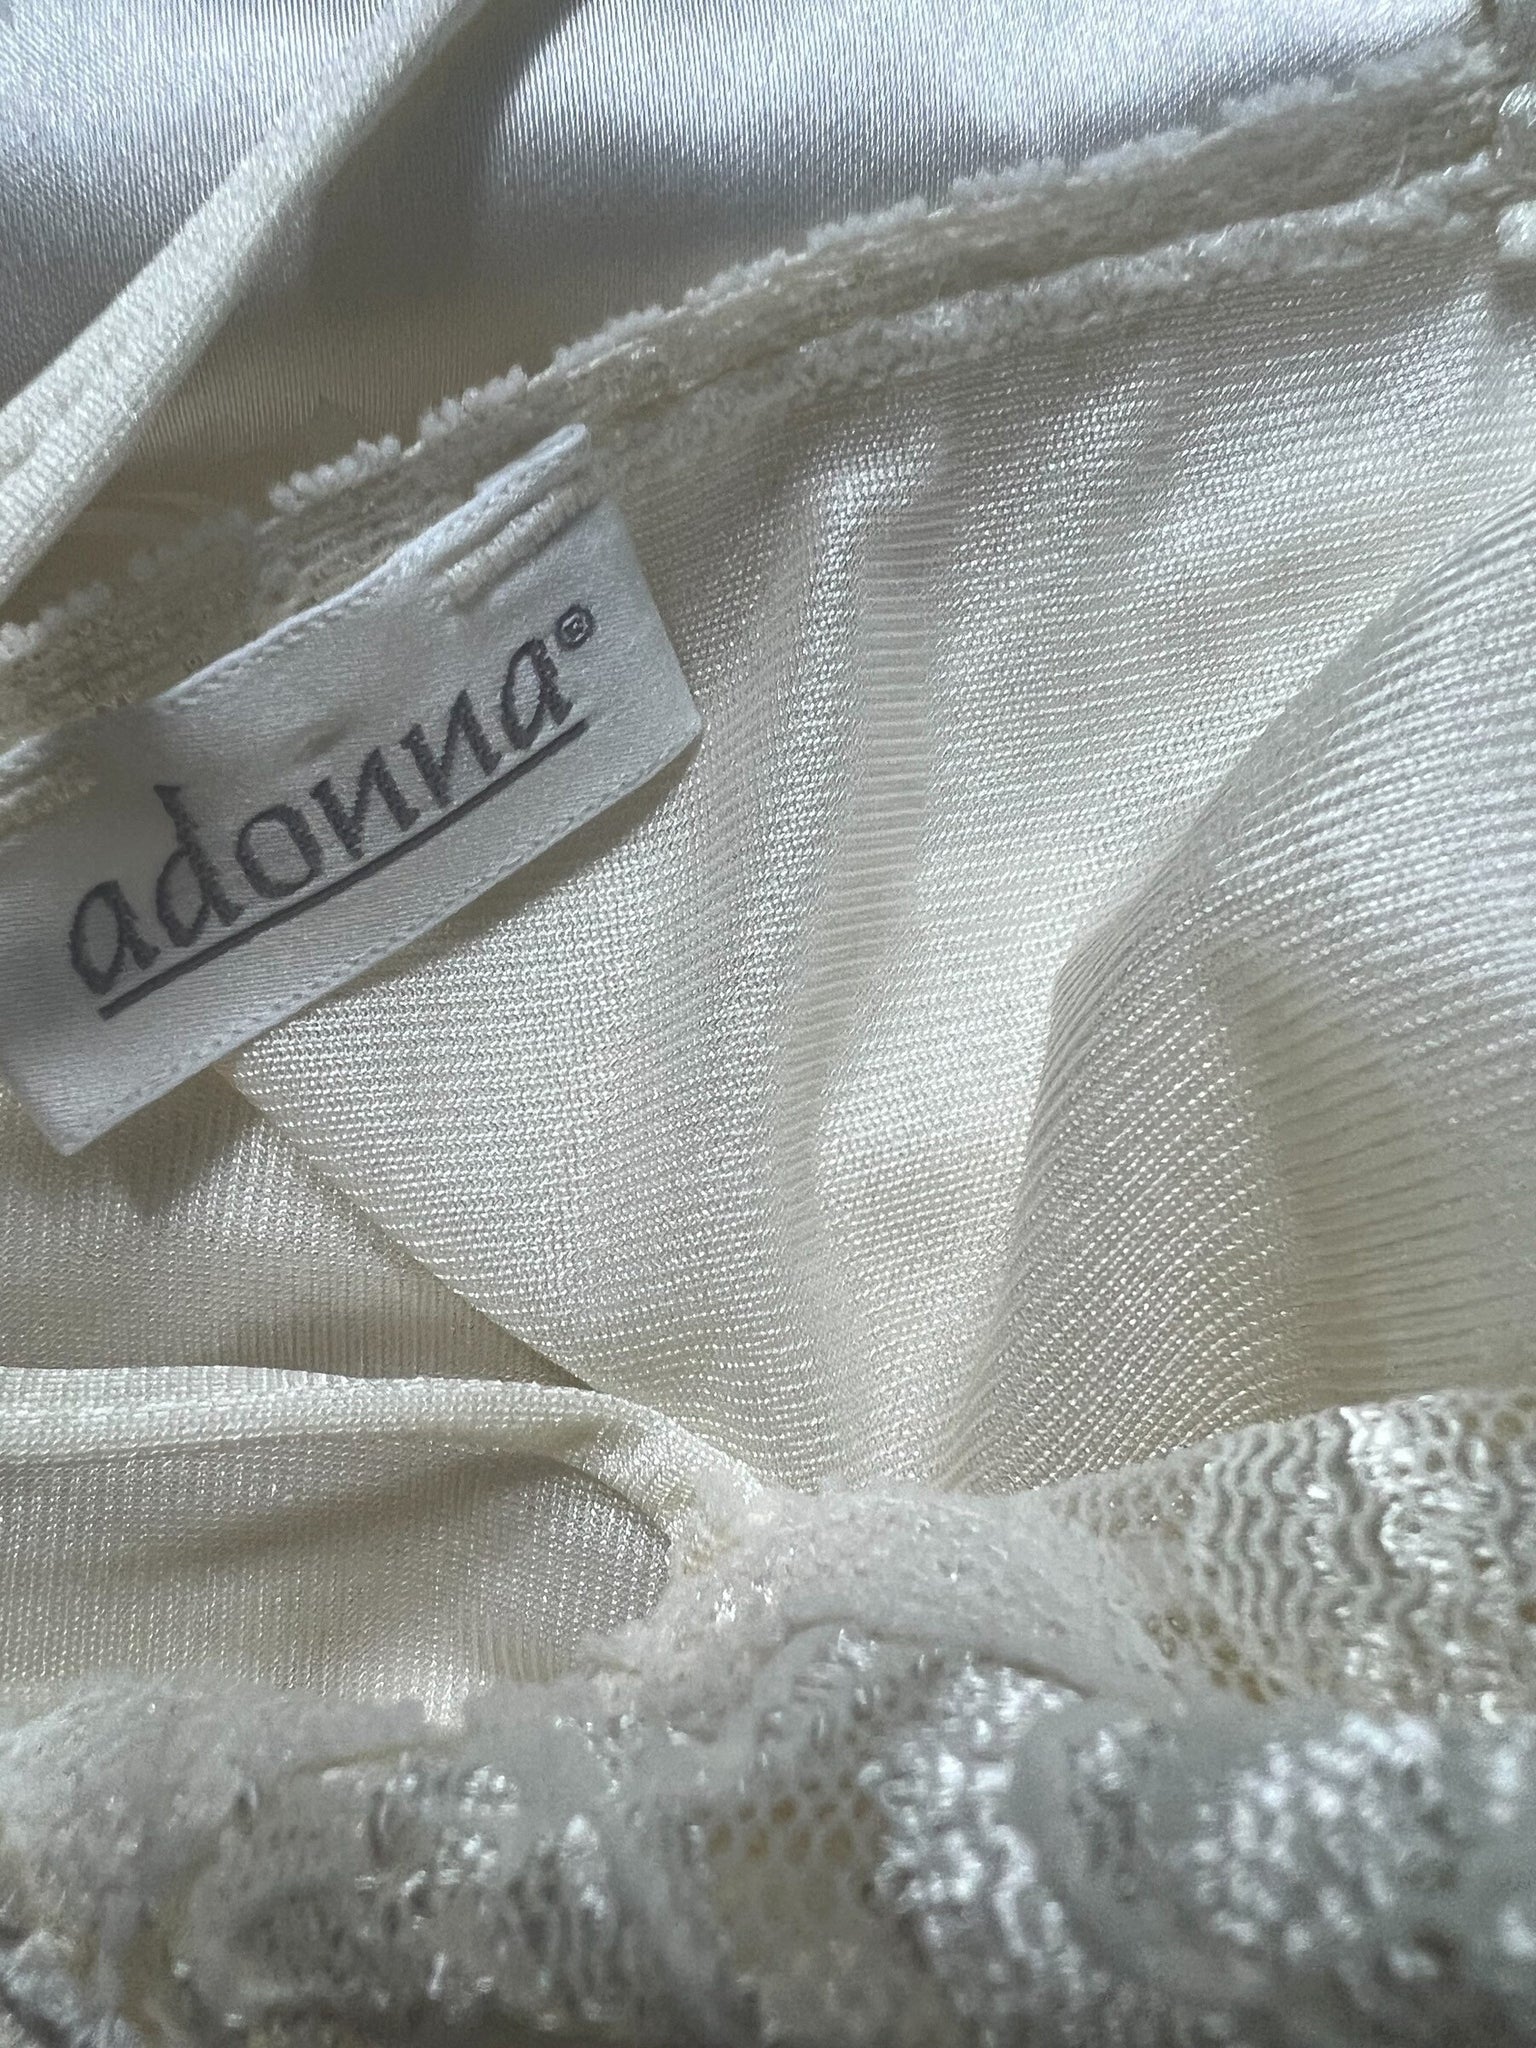 Vintage 80's Adonna lingerie nightie top M